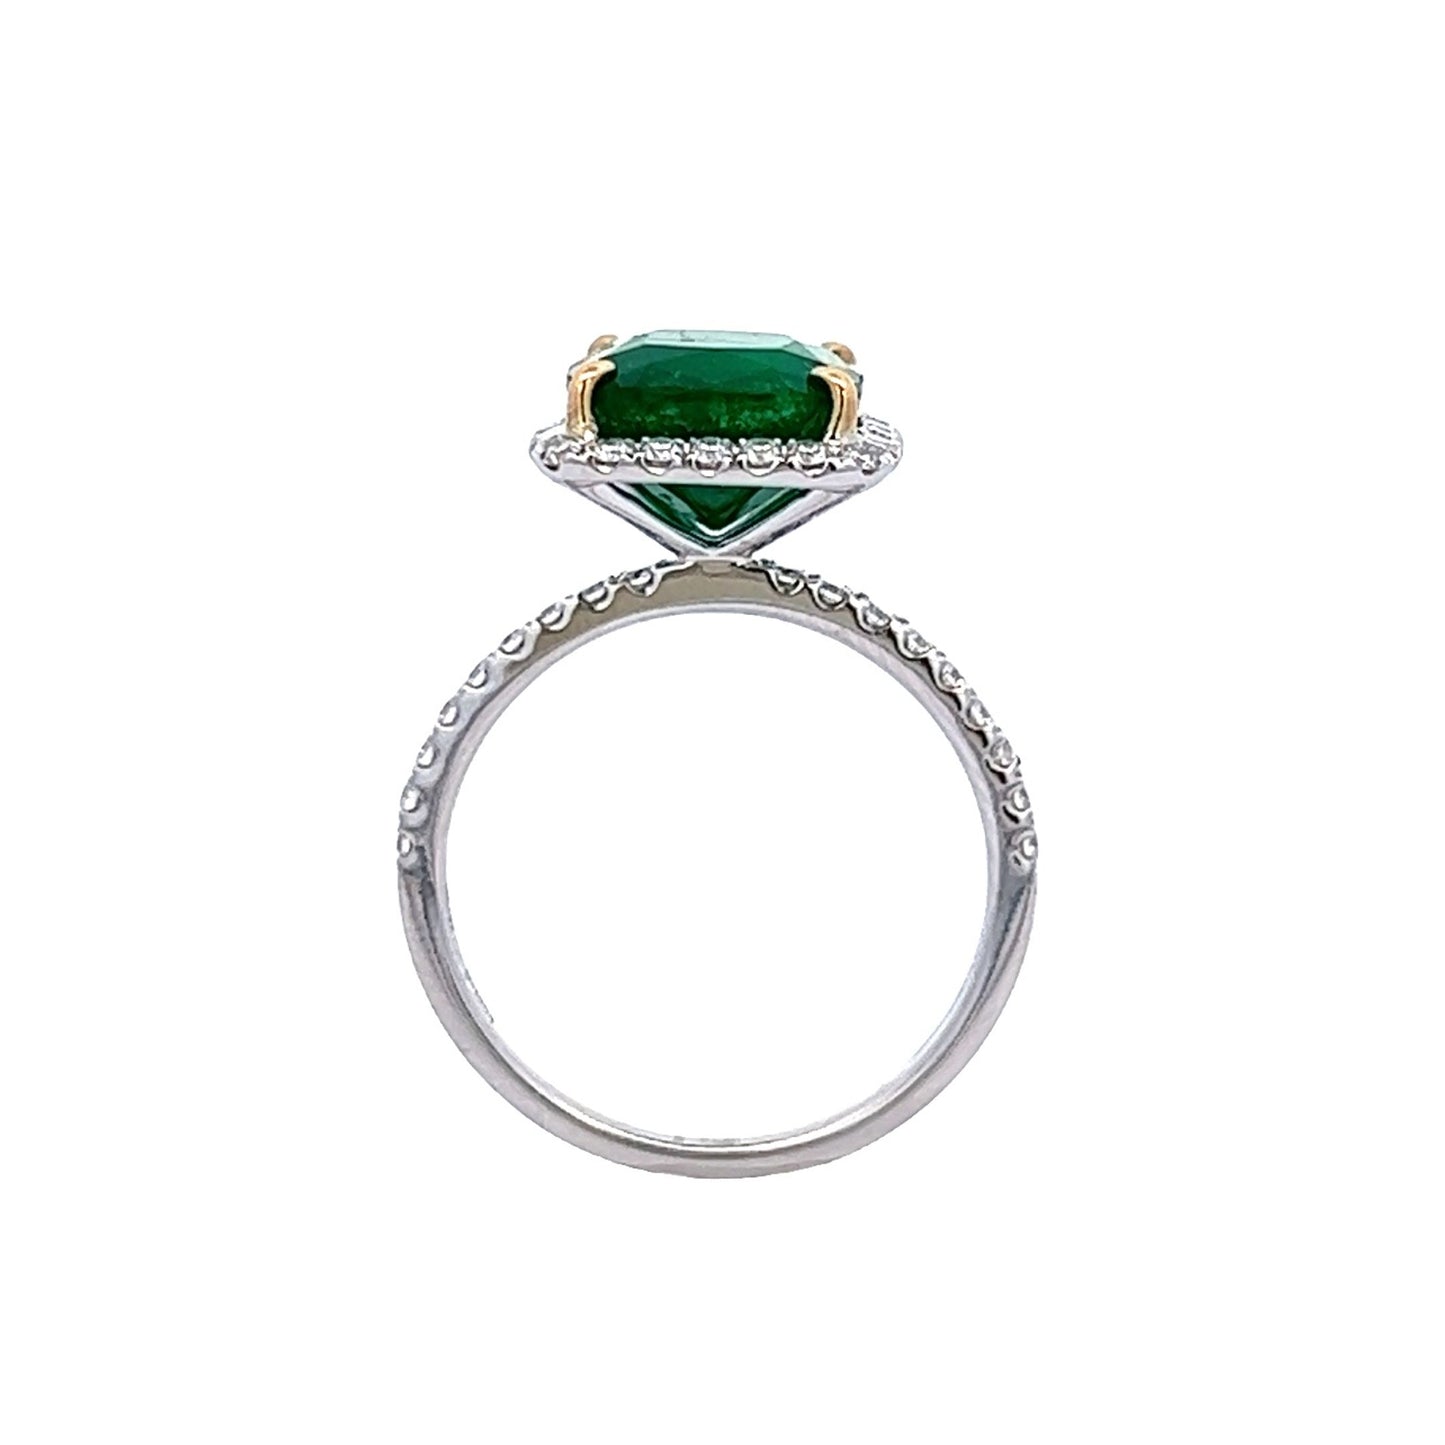 3.11 Cts Cushion Cut Emerald Halo Ring GIA